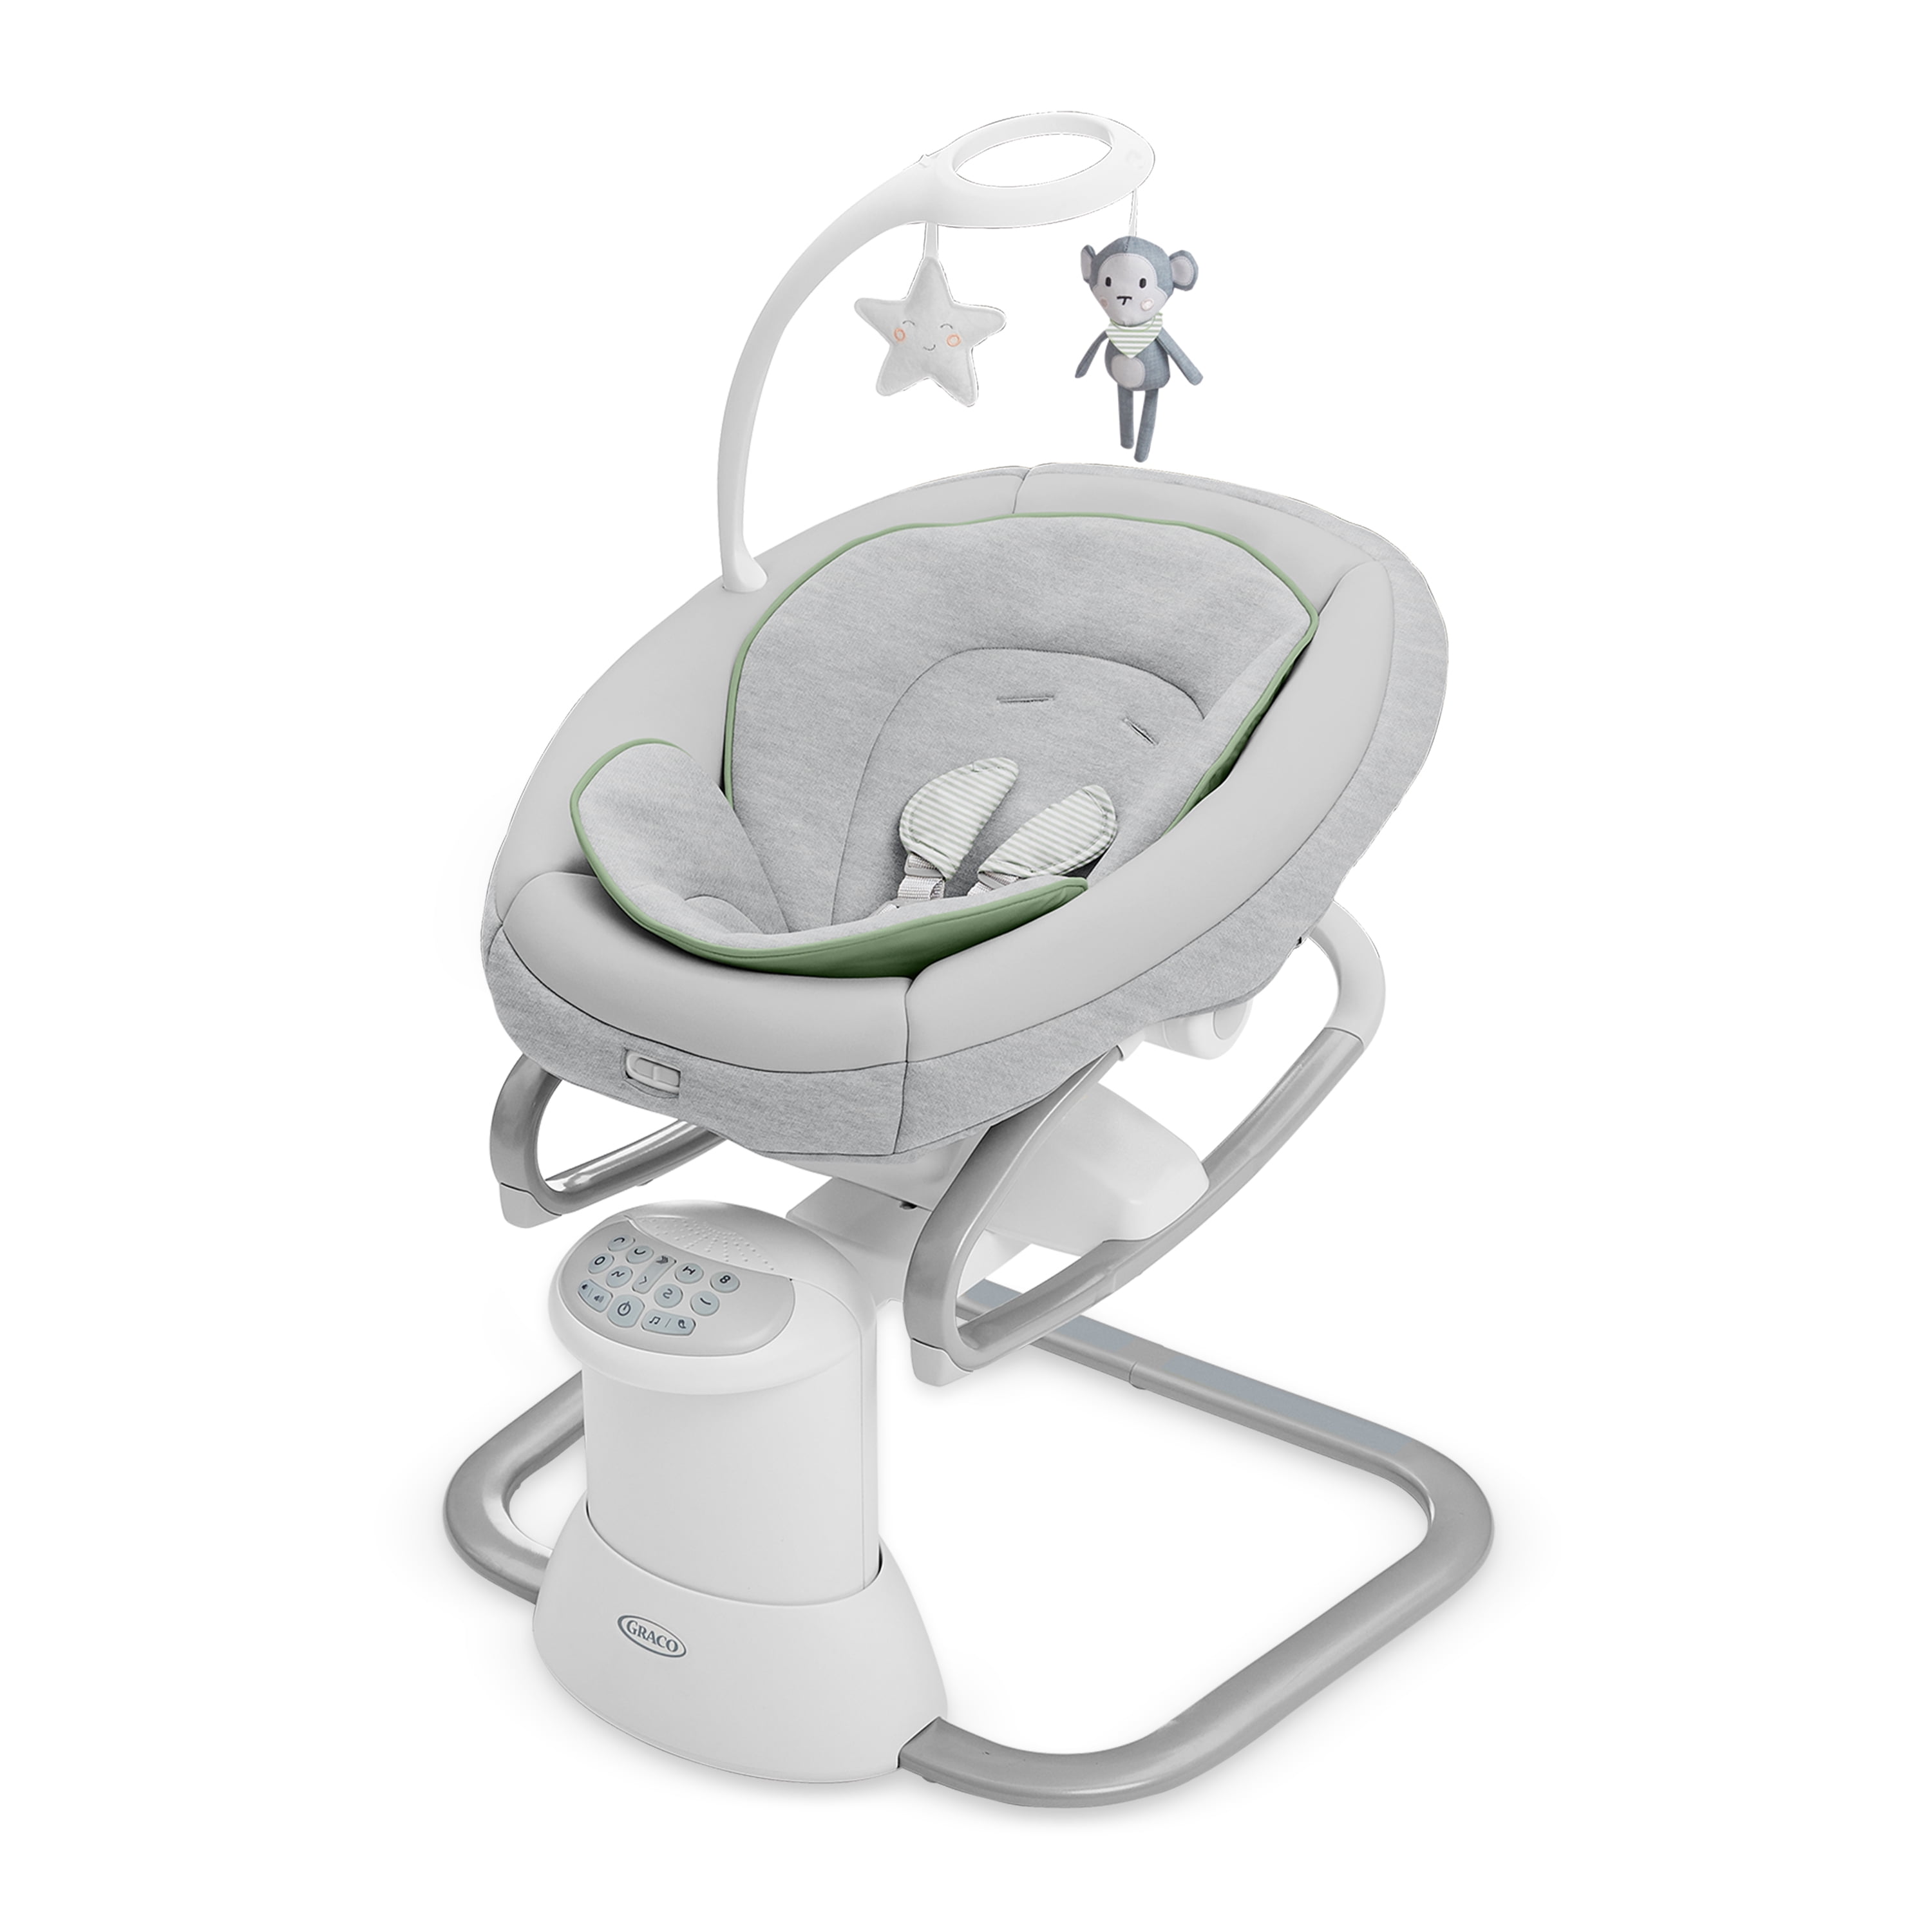 NEW Graco 2 in 1 Baby Swing Rocker Bouncer Chair Adjustable Swing Speed 